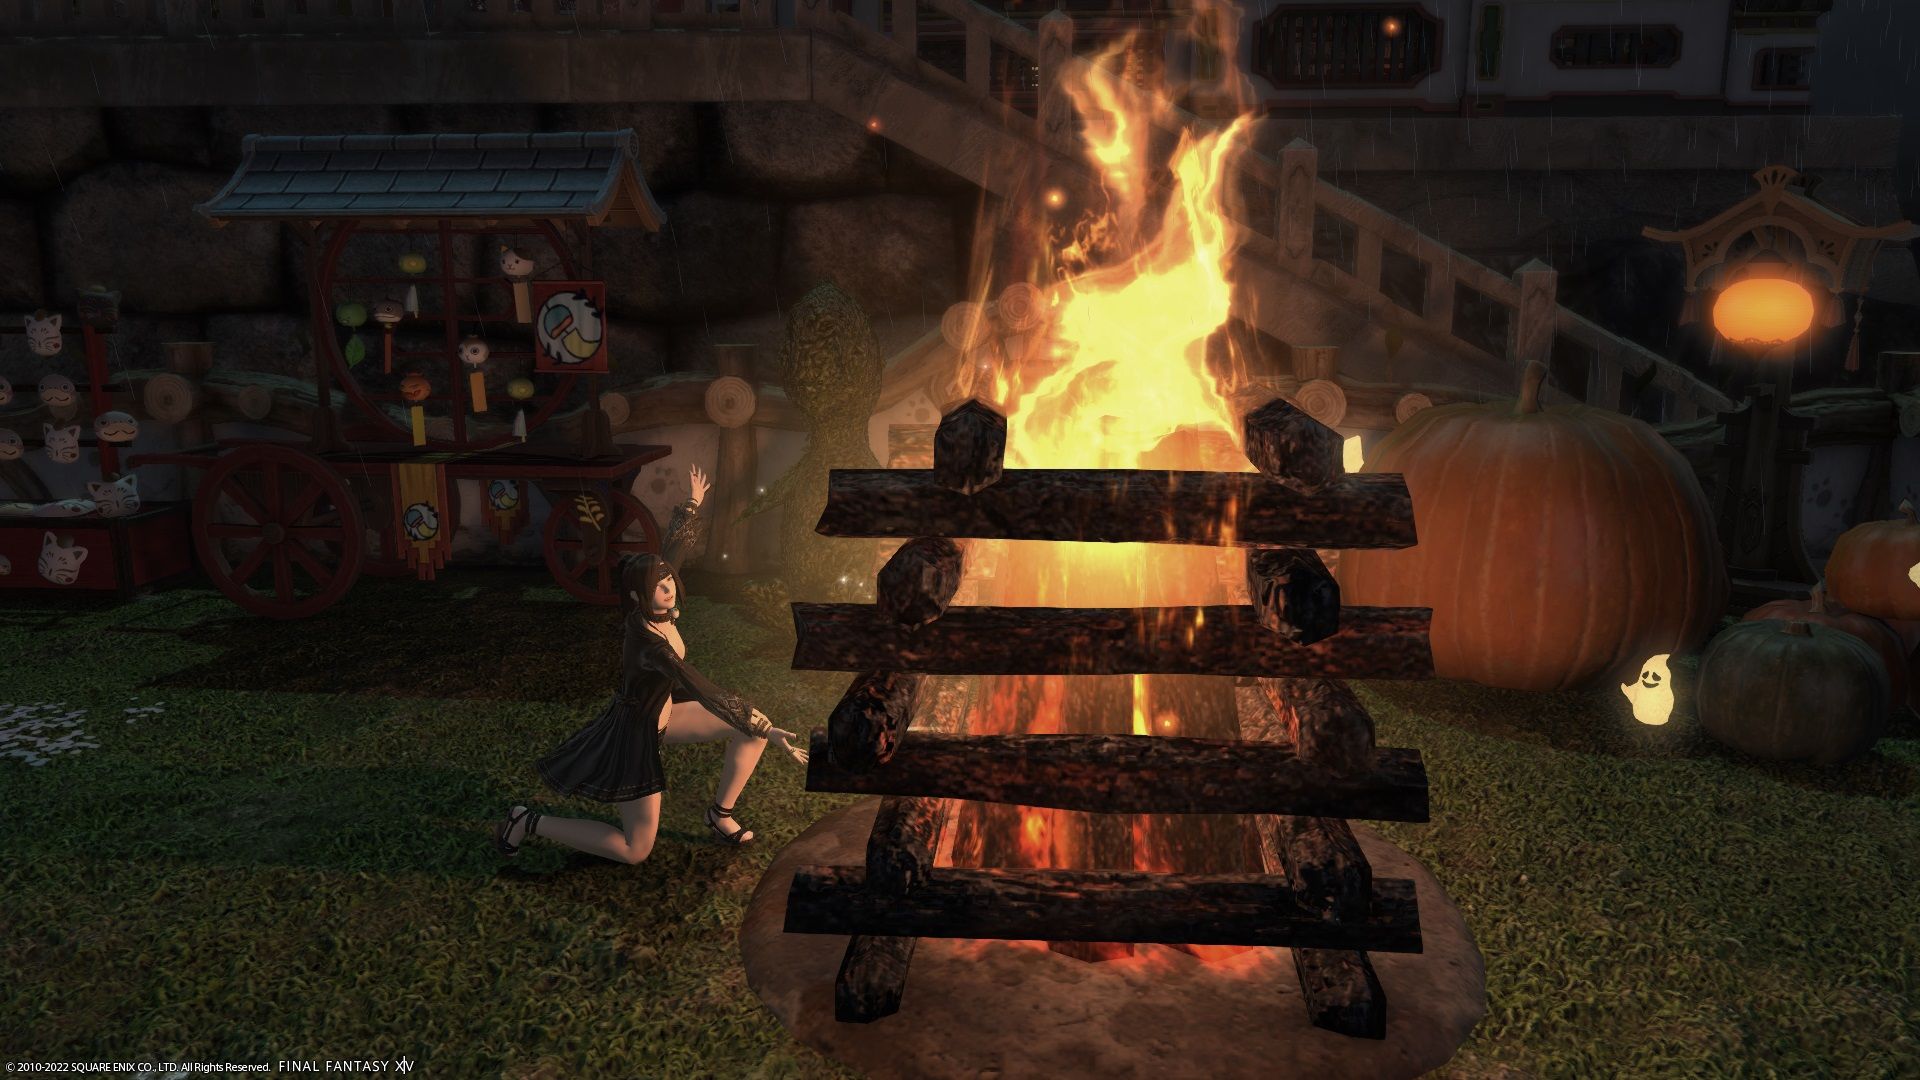 Final Fantasy 14 player showcasing the summer bonfire furnishing